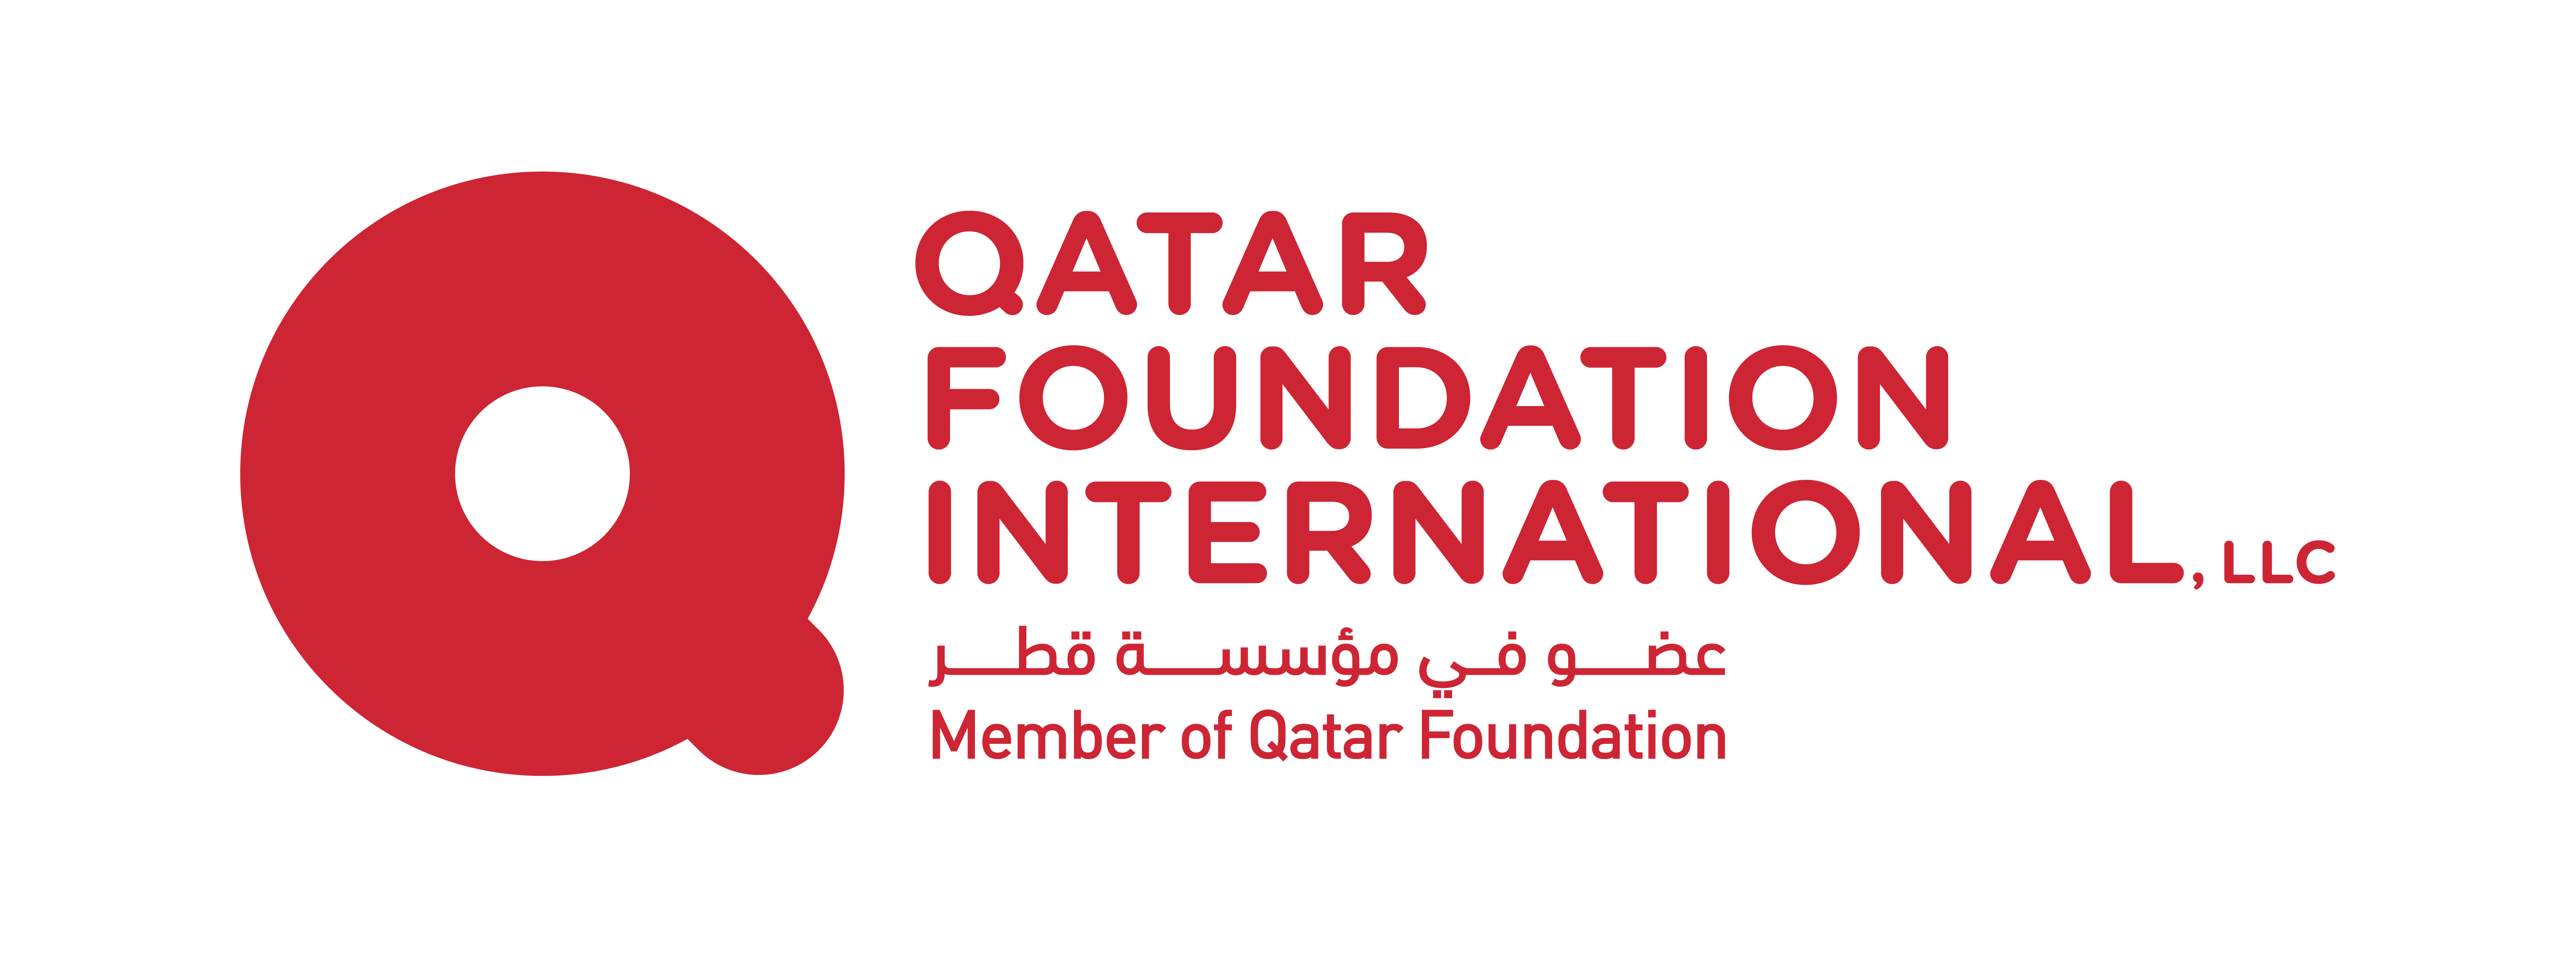 Qatar Foundation (primary sponsor) logo